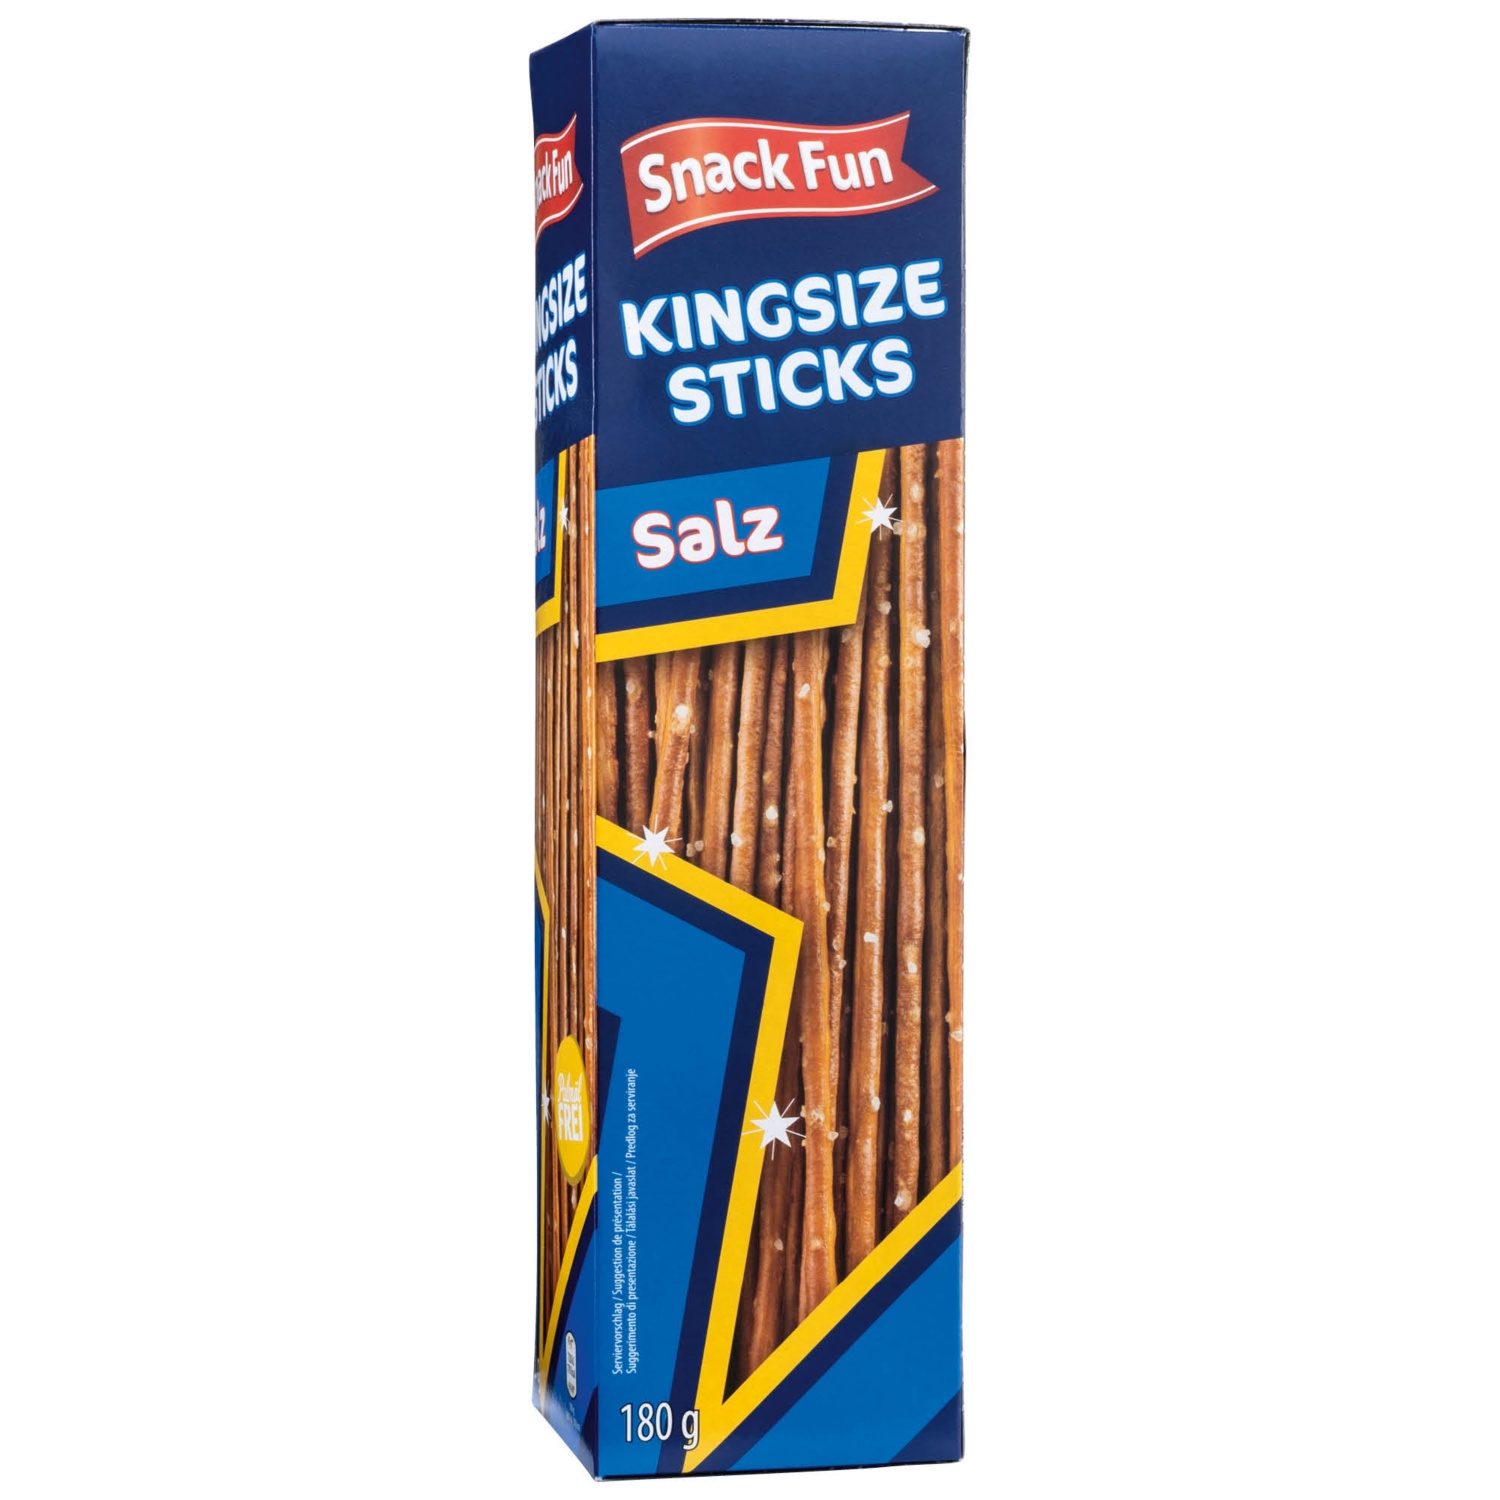 SNACK FUN Kingsize Sticks, Salz